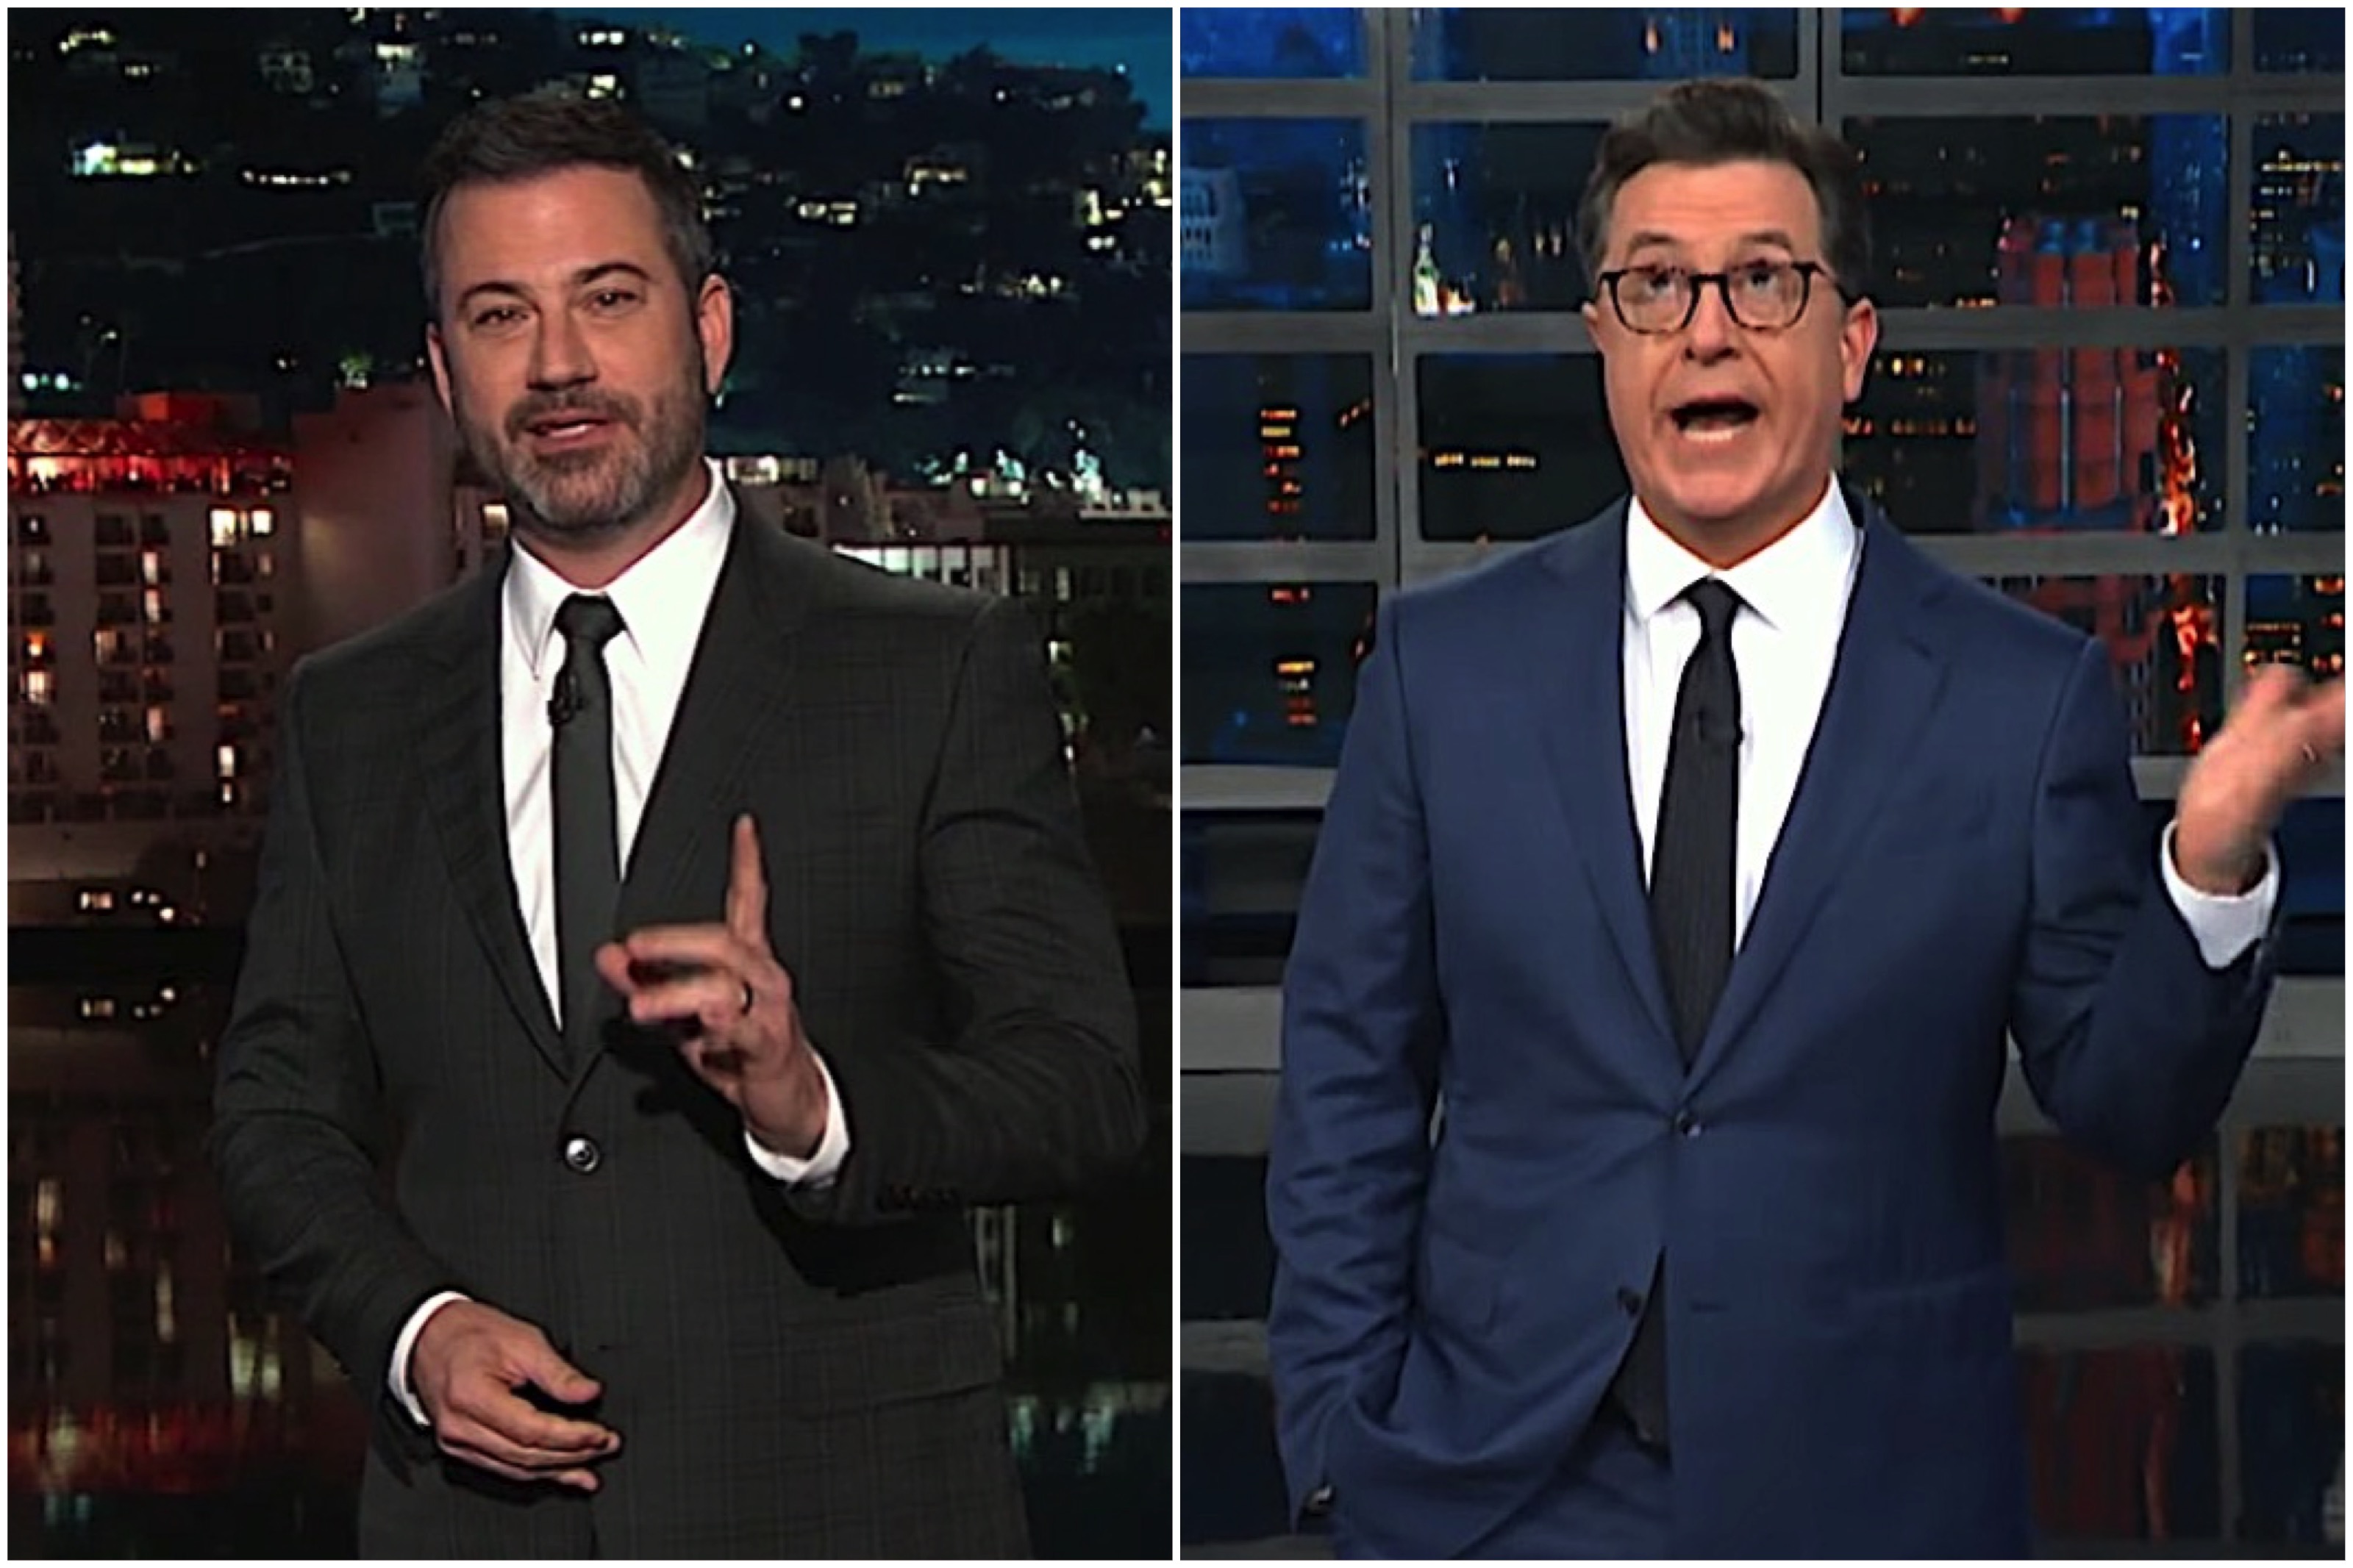 Stephen Colbert and Jimmy Kimmel gawk at Giuliani